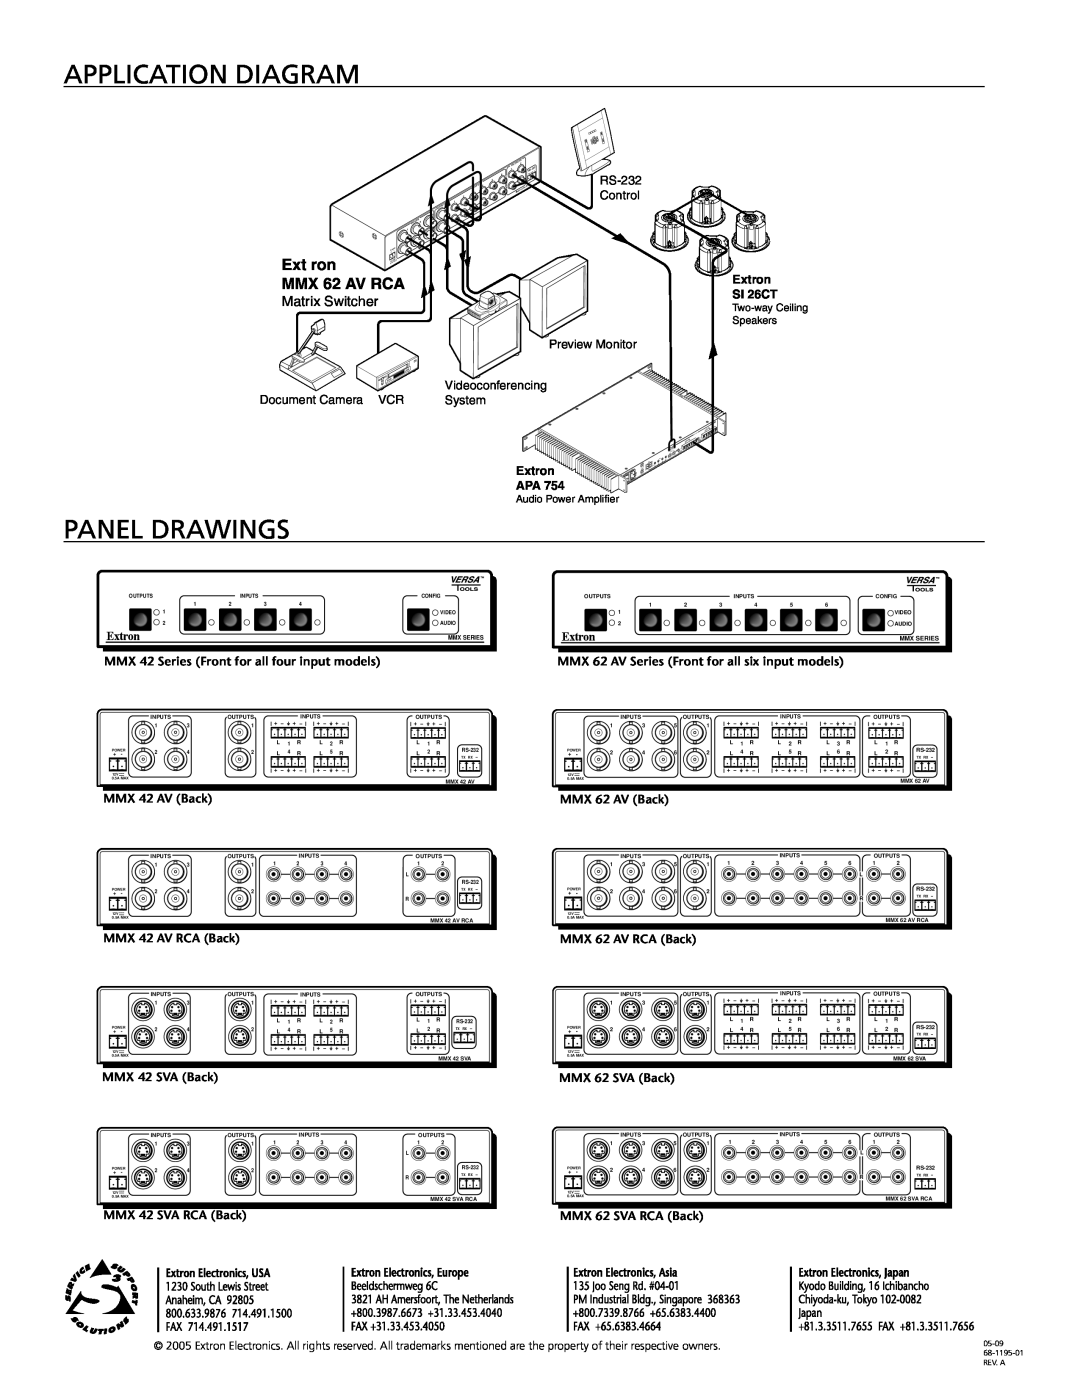 Extron electronic MMX 62 SVA RCA Application Diagram, Panel Drawings, Ext ron, MMX 62 AV RCA, Matrix Switcher, Extron 